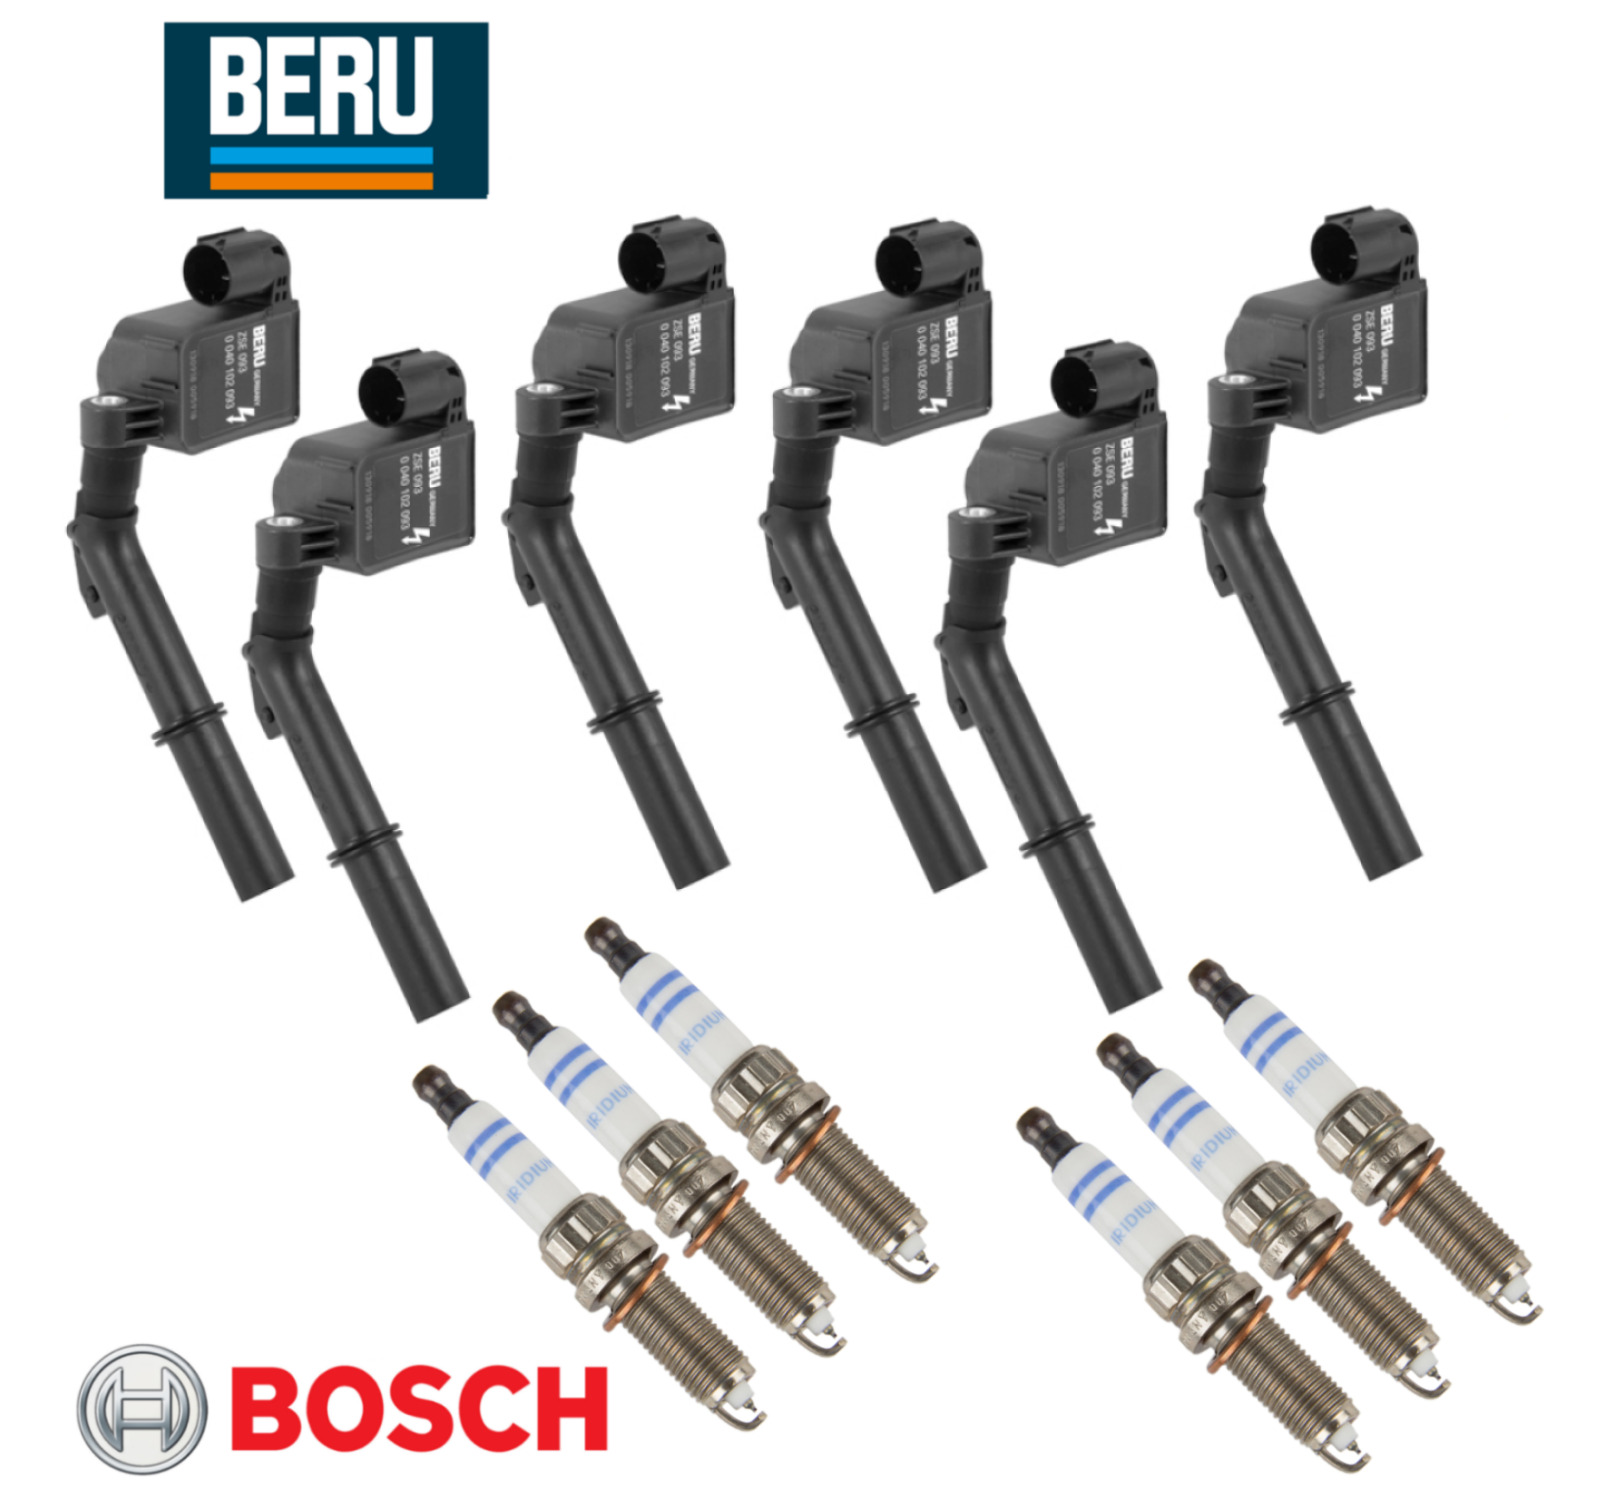 OEM Ignition Coil Beru & Spark Plug Double Iridium Bosch (6sets) for Mercedes V6